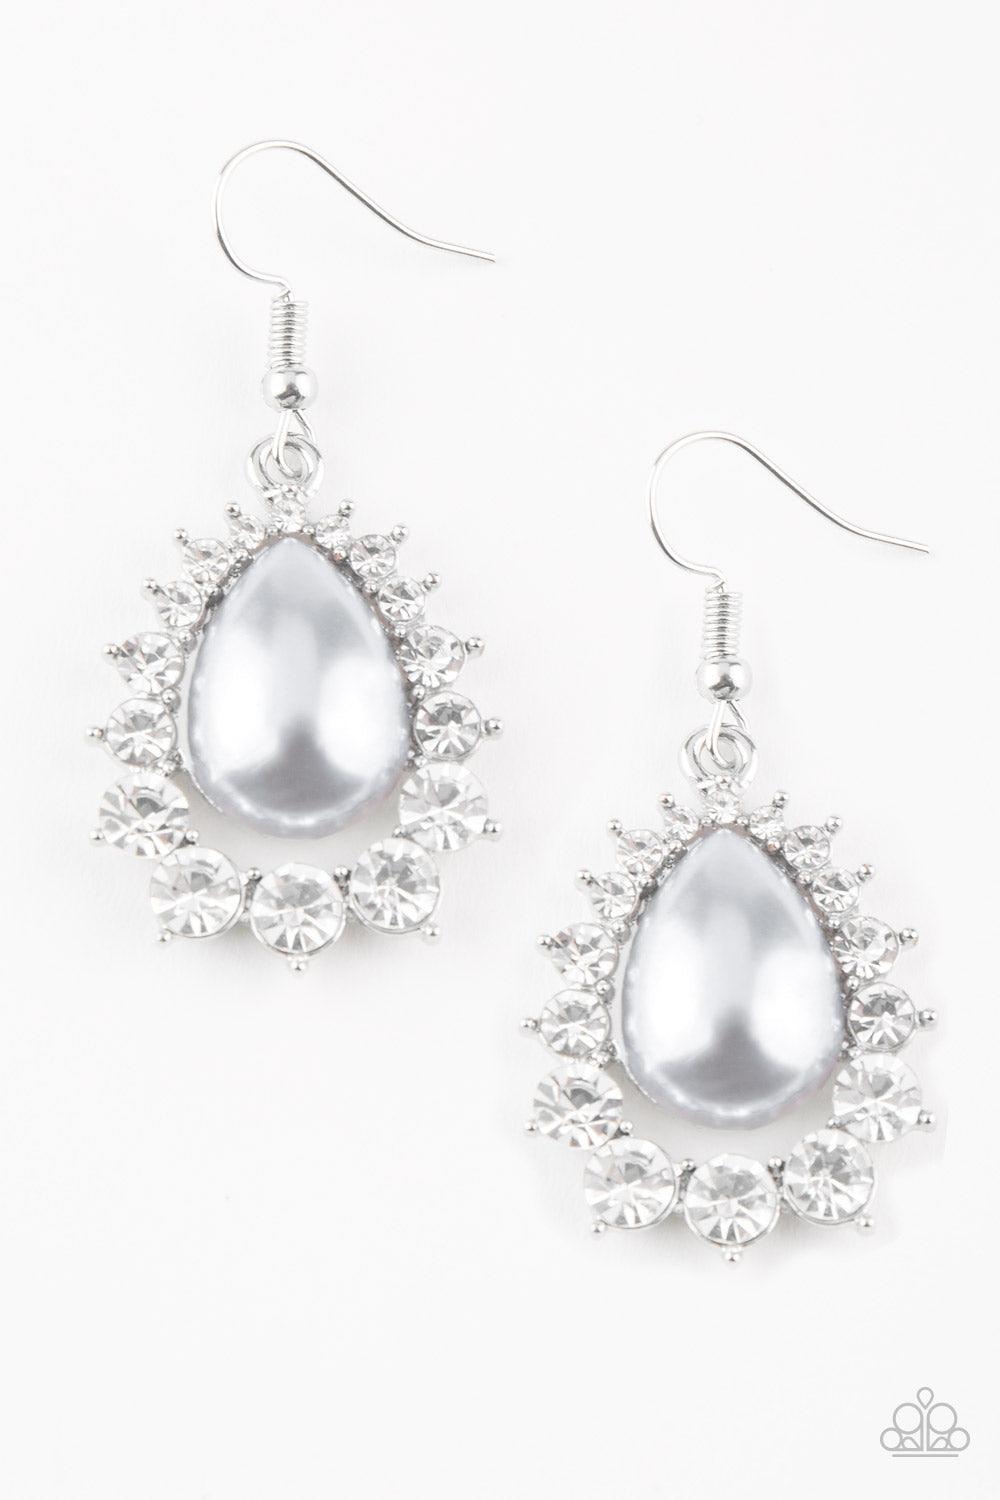 Party Sterling Silver Pearl Earrings, 9.8 Gm at Rs 407.05/pair in Jaipur |  ID: 15078728755